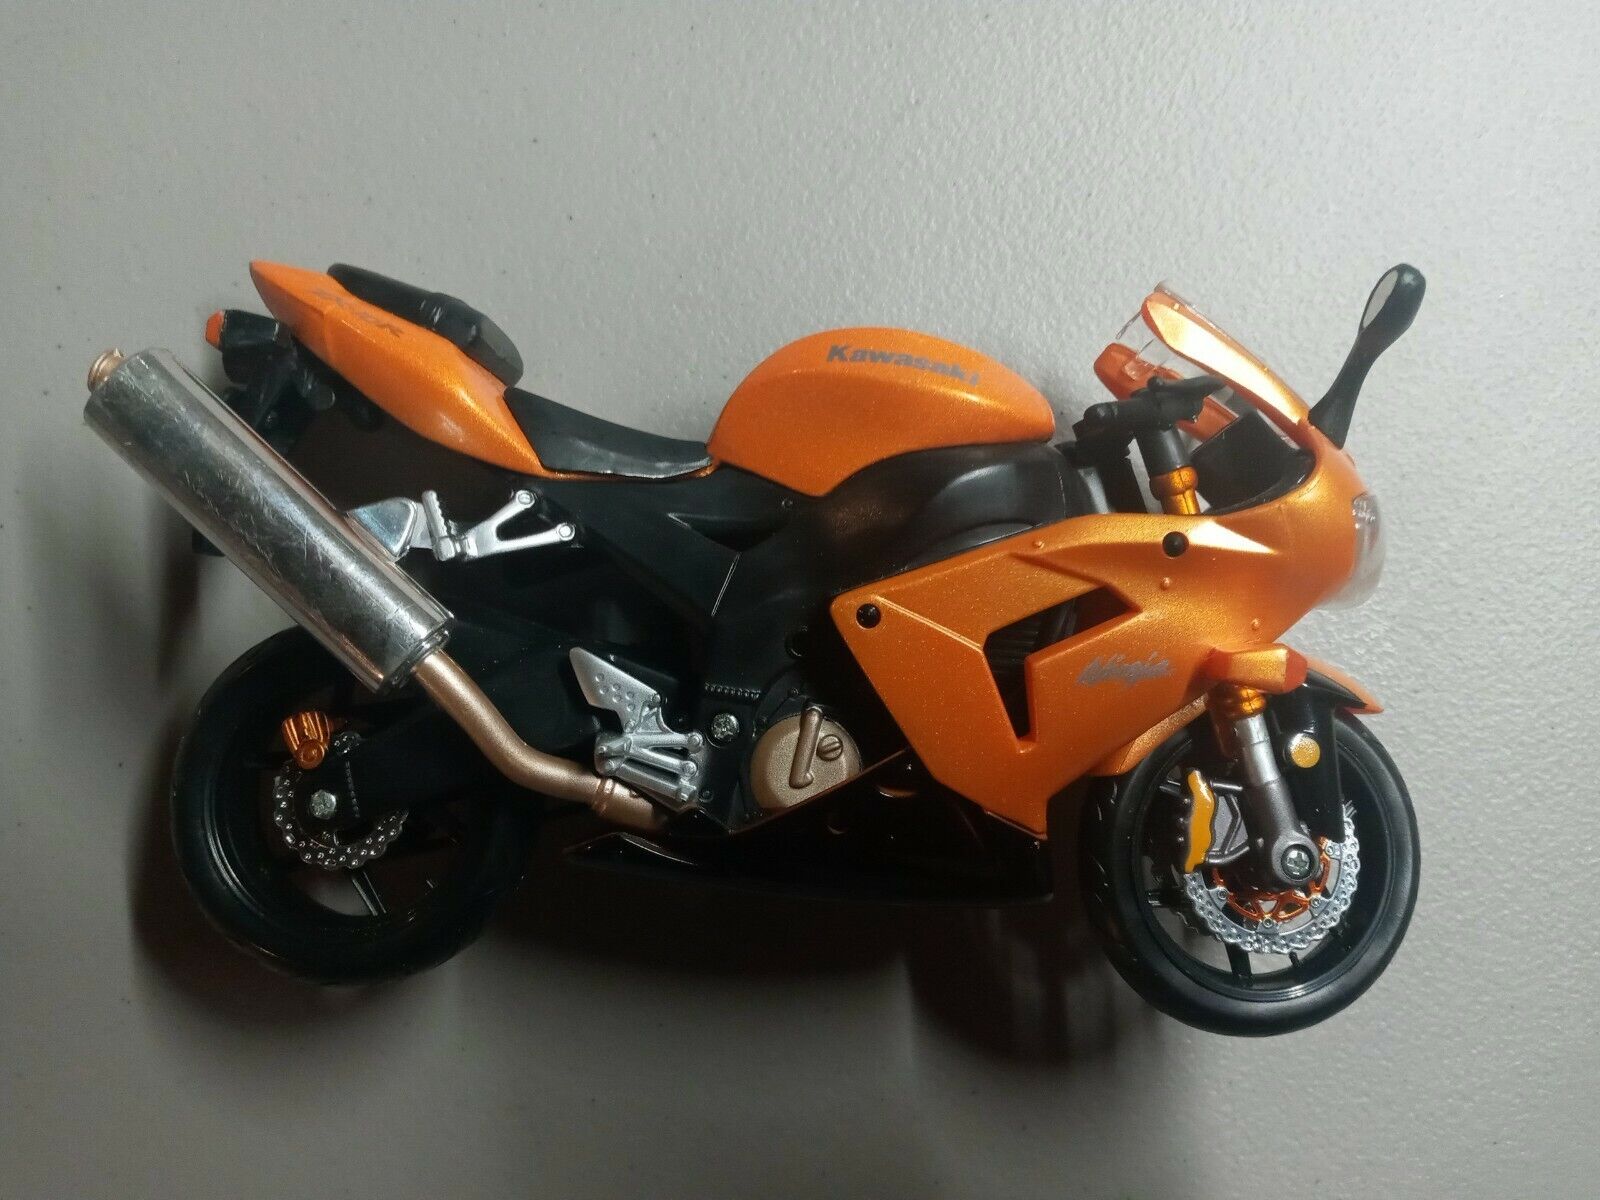 Kawasaki Ninja ZX 10r Orange Motorcycle 1/12 Diecast Model by 